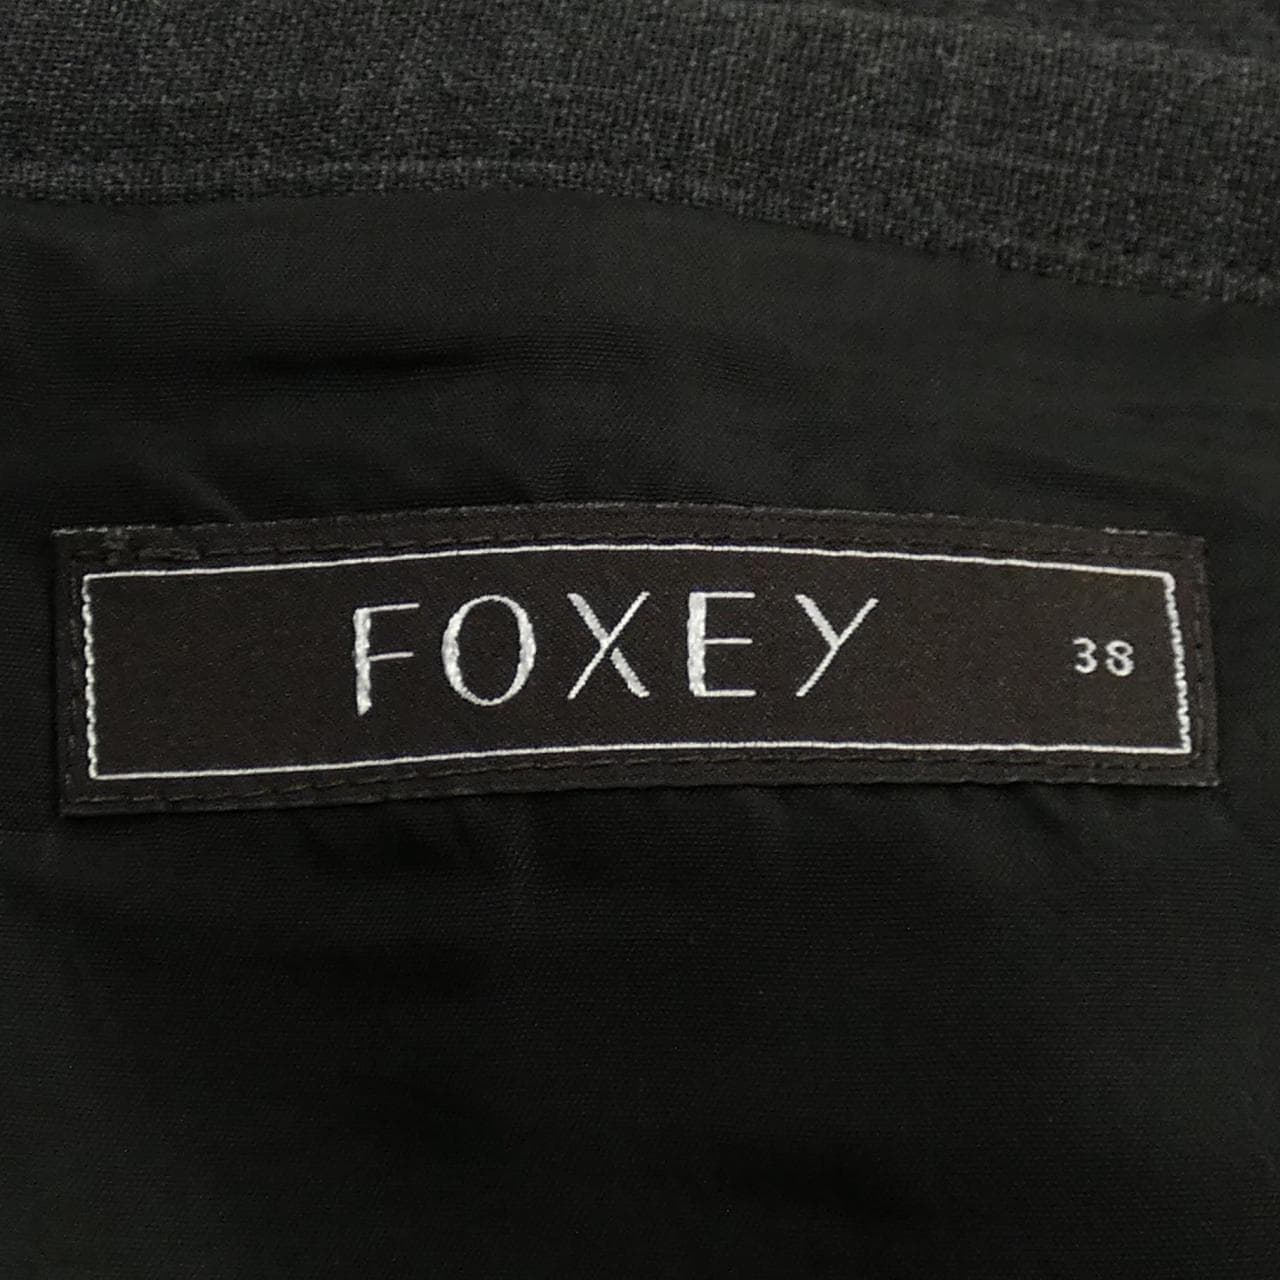 Foxy FOXEY skirt